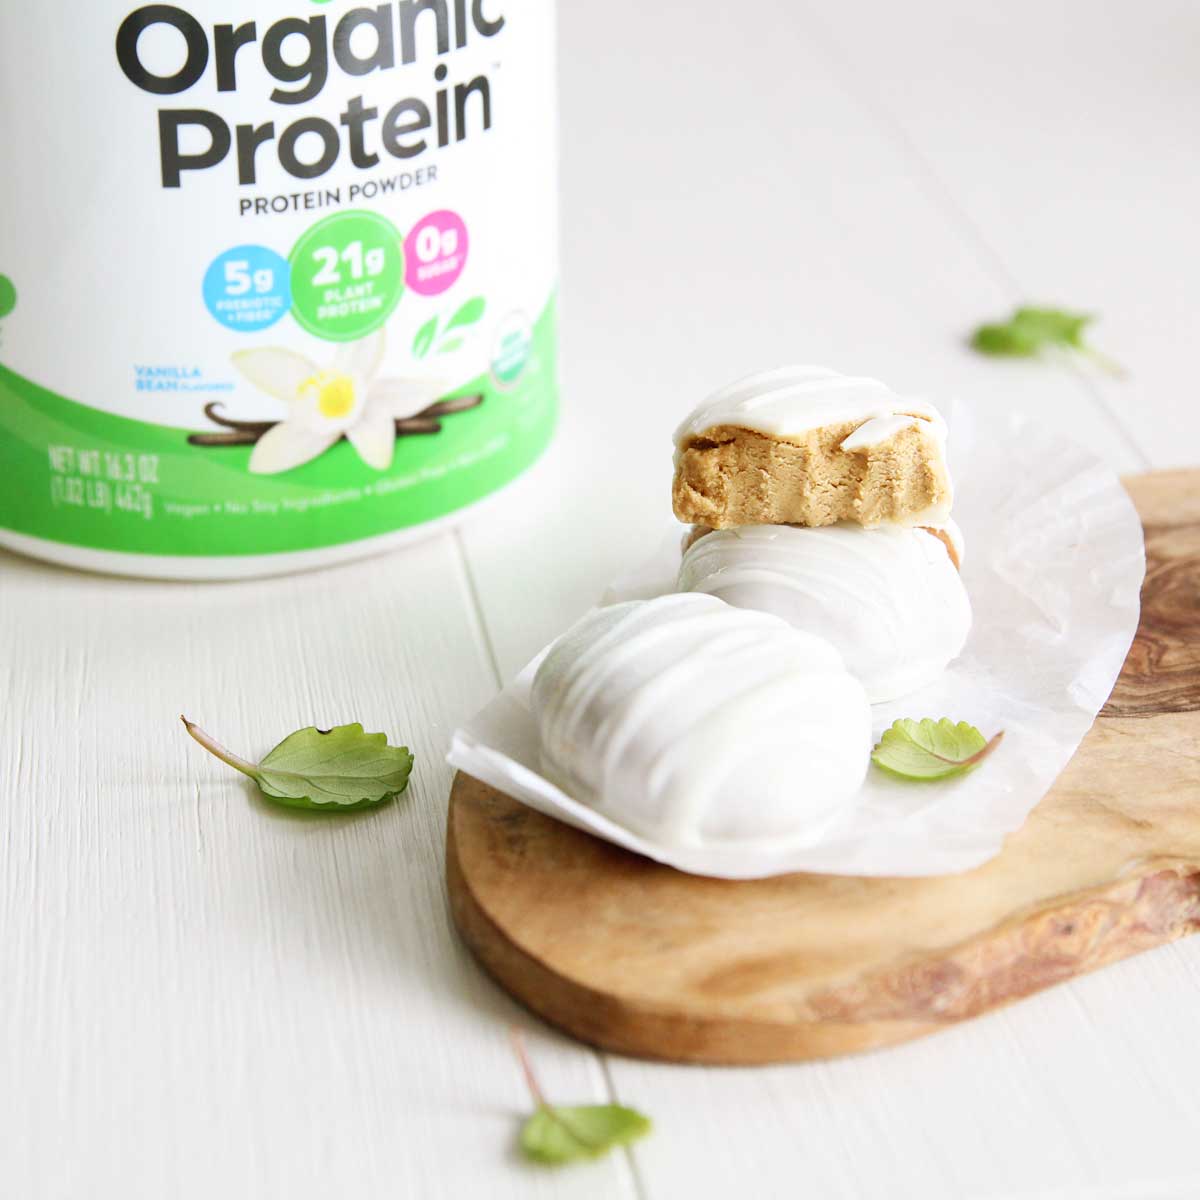 Simple Greek Yogurt Peanut Butter Protein Bars to eat for Breakfast or Post-Workout - Greek Yogurt Peanut Butter Protein Bars